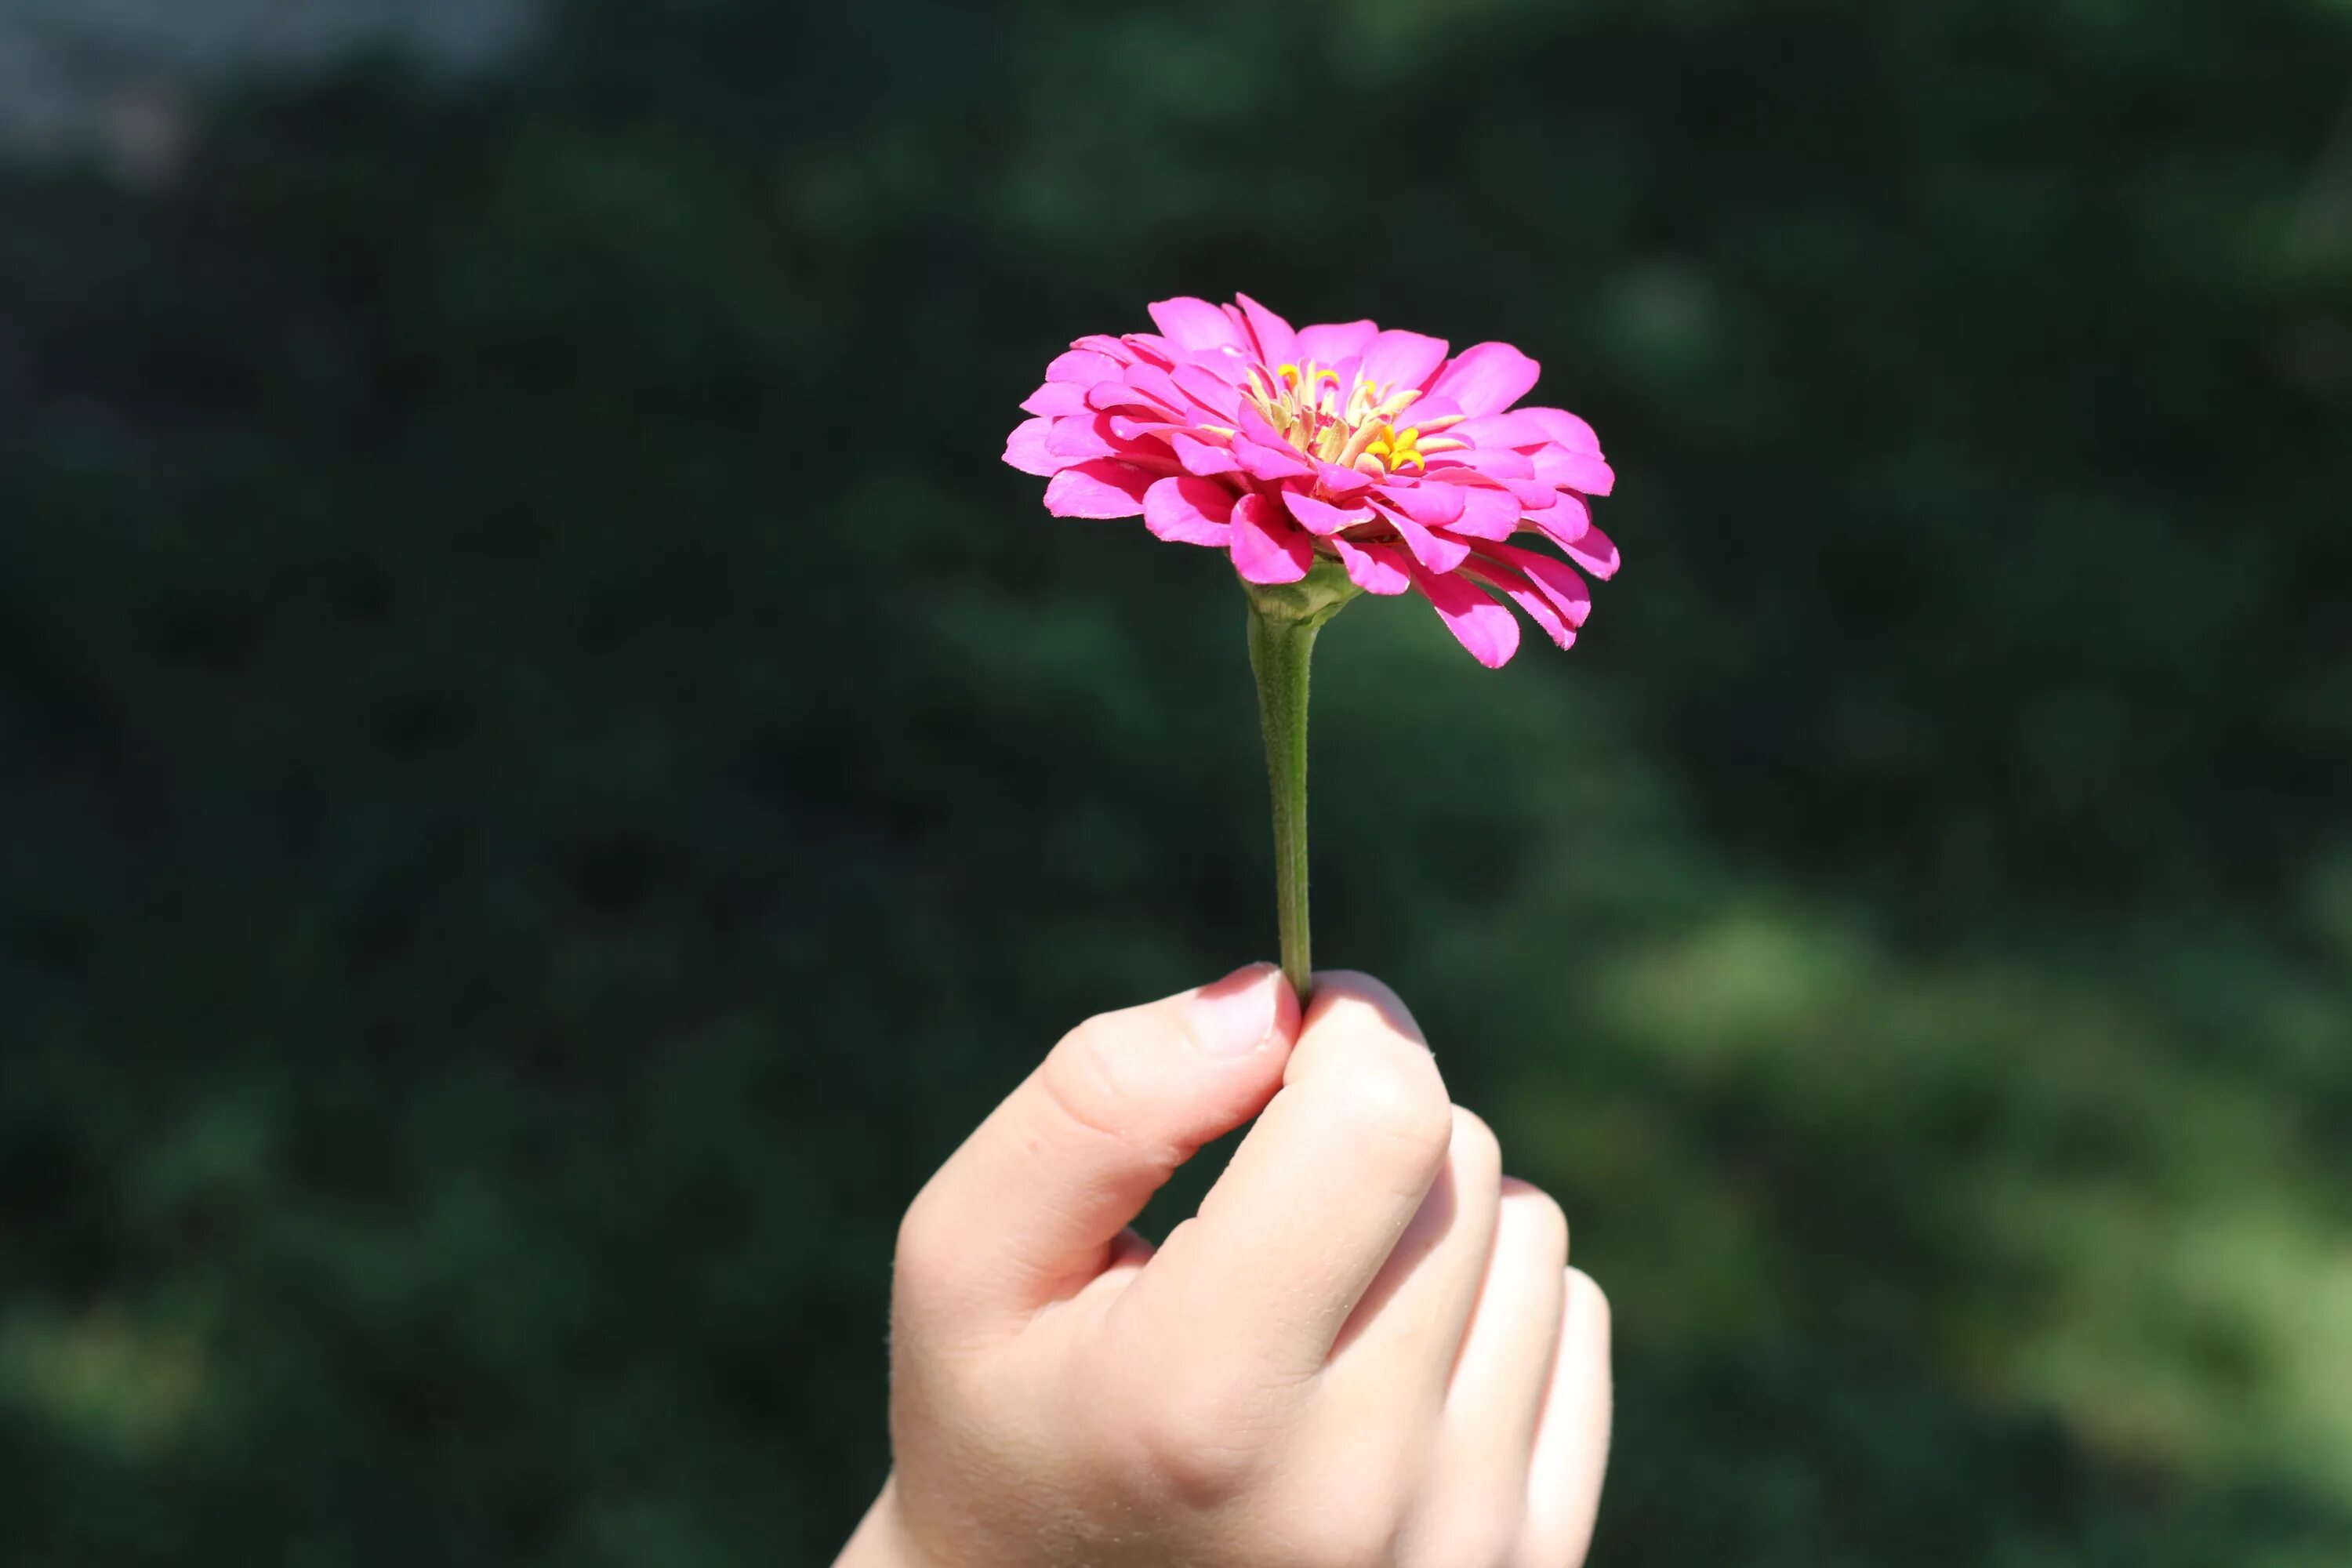 Be a flower kusuriya. Цветок на руку.. Цветочек в руке. Сорванный цветок. Рука с цветами.